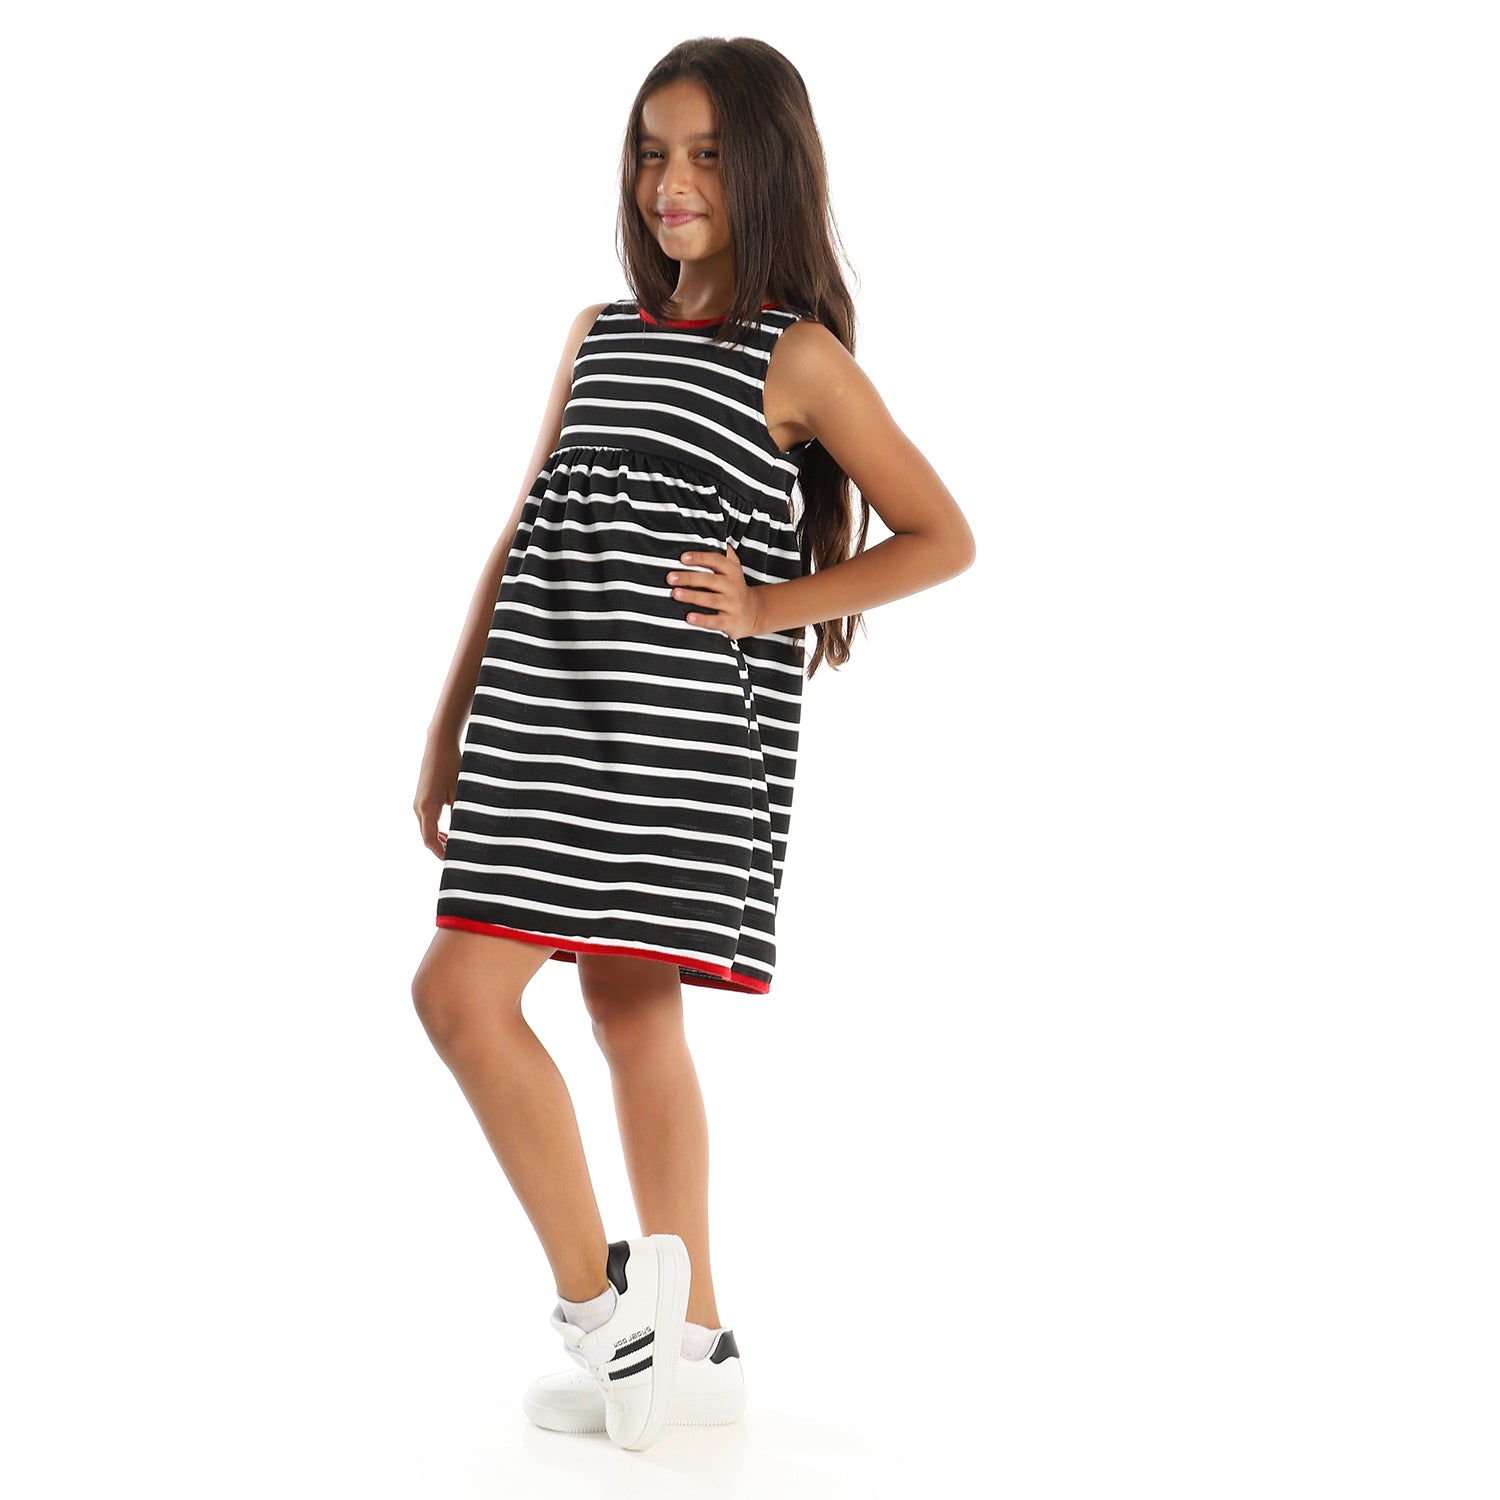 Kady Girls Striped Sleeveless Dress